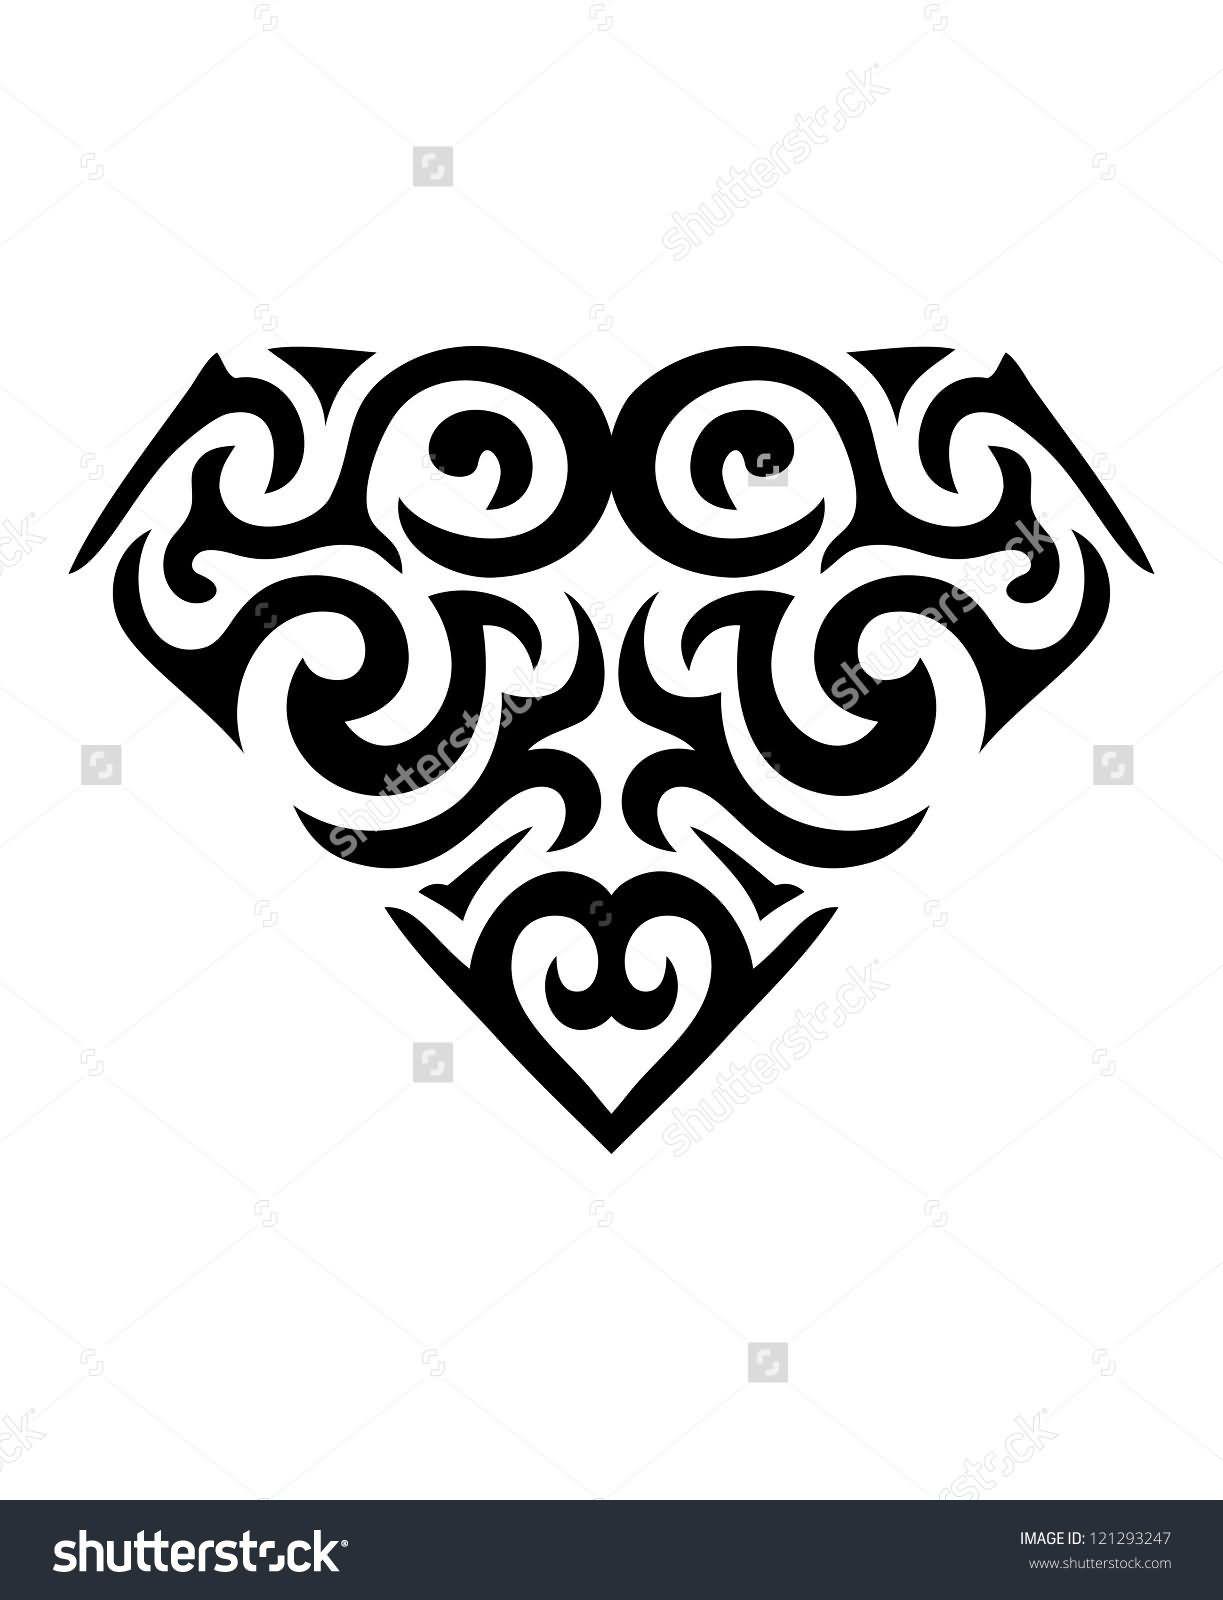 Cool Diamond Logo - Cool Diamond Symbol Tattoo Design | Just cool tattoos | Tattoos ...